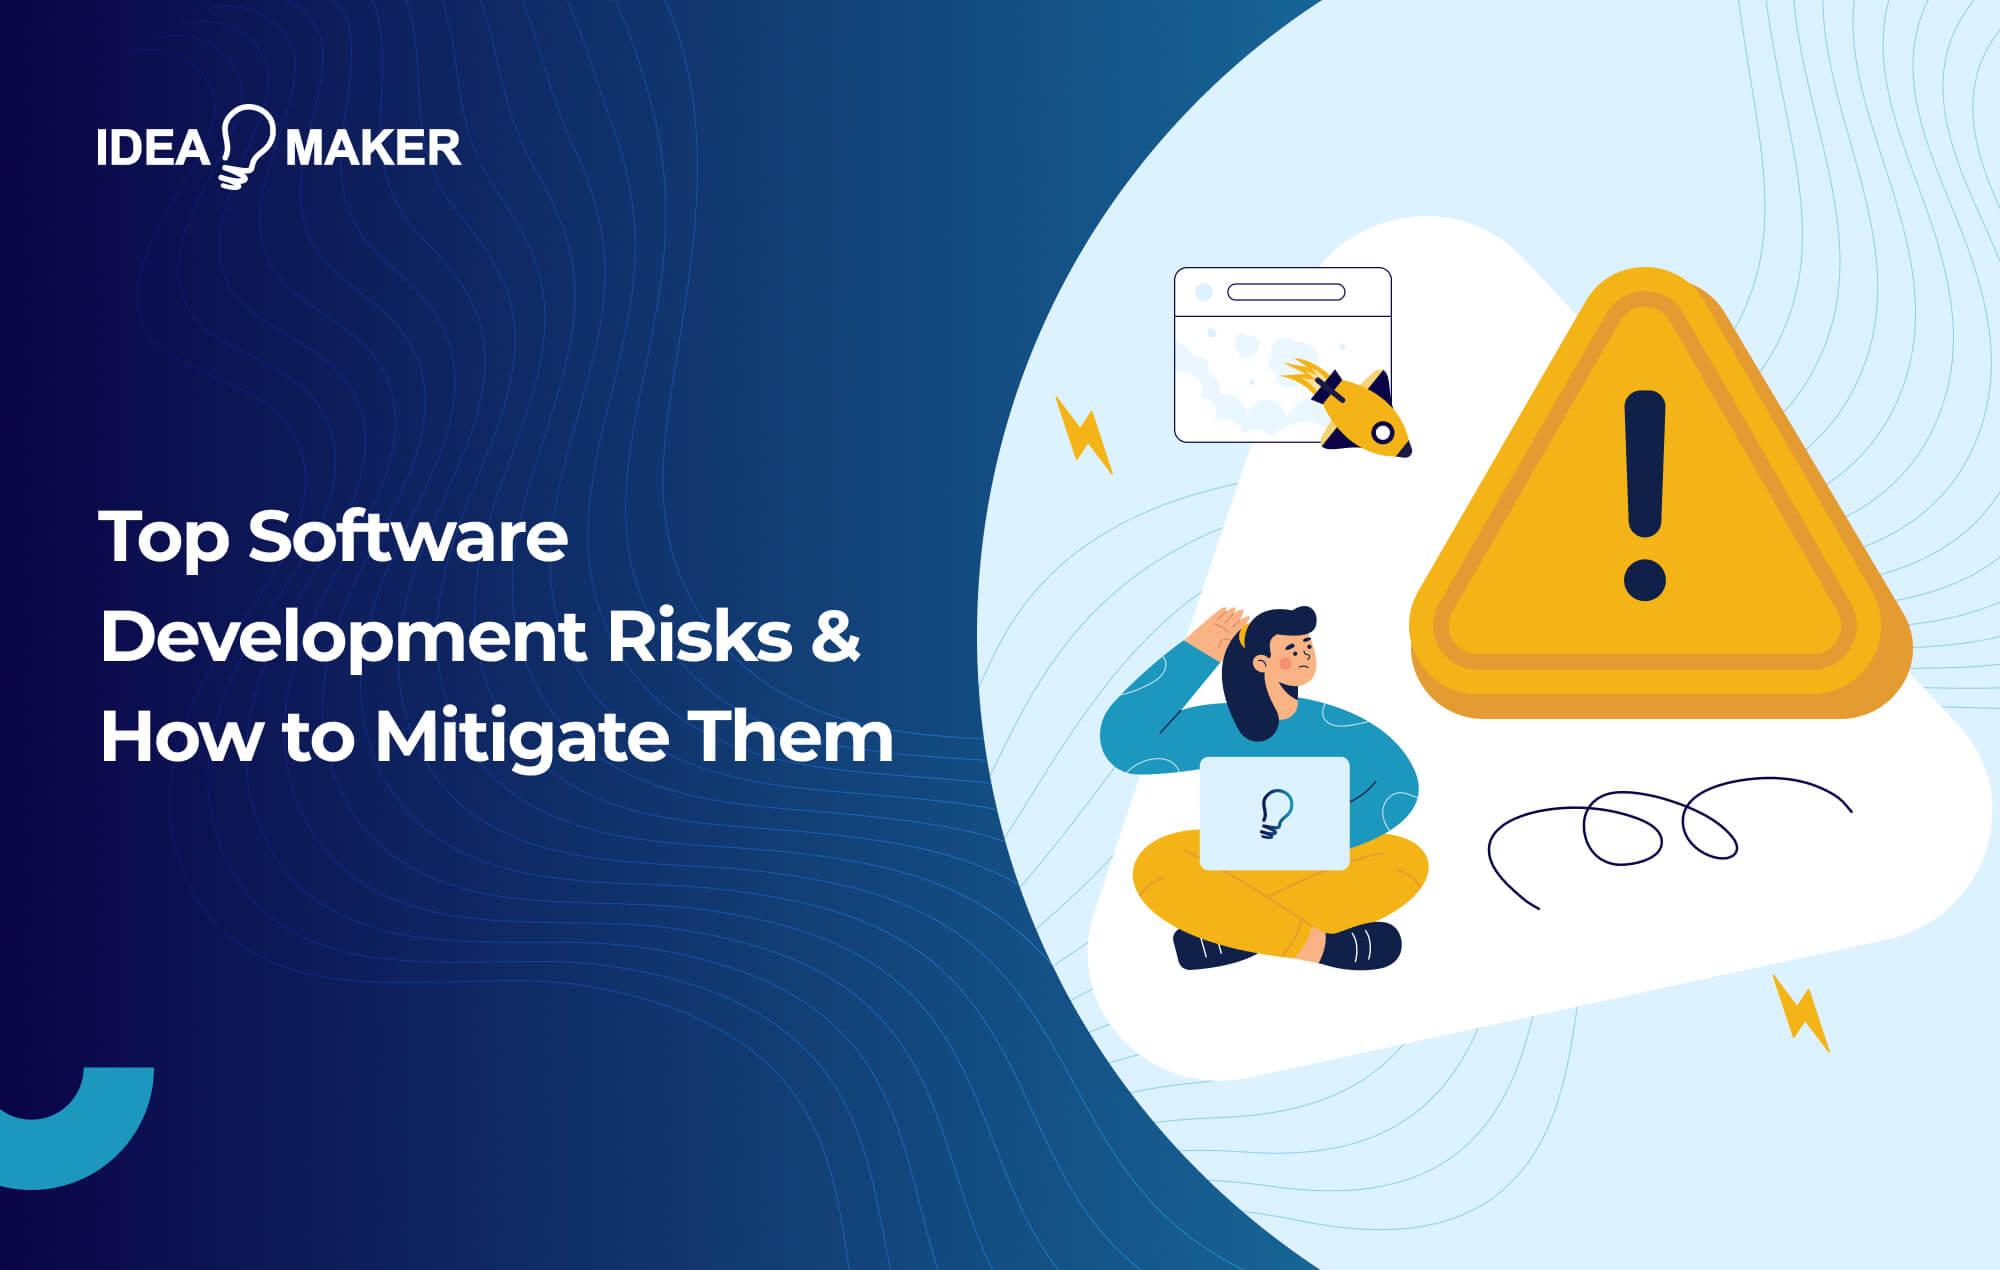 Ideamaker - Top Software Development Risks & How to Mitigate Them